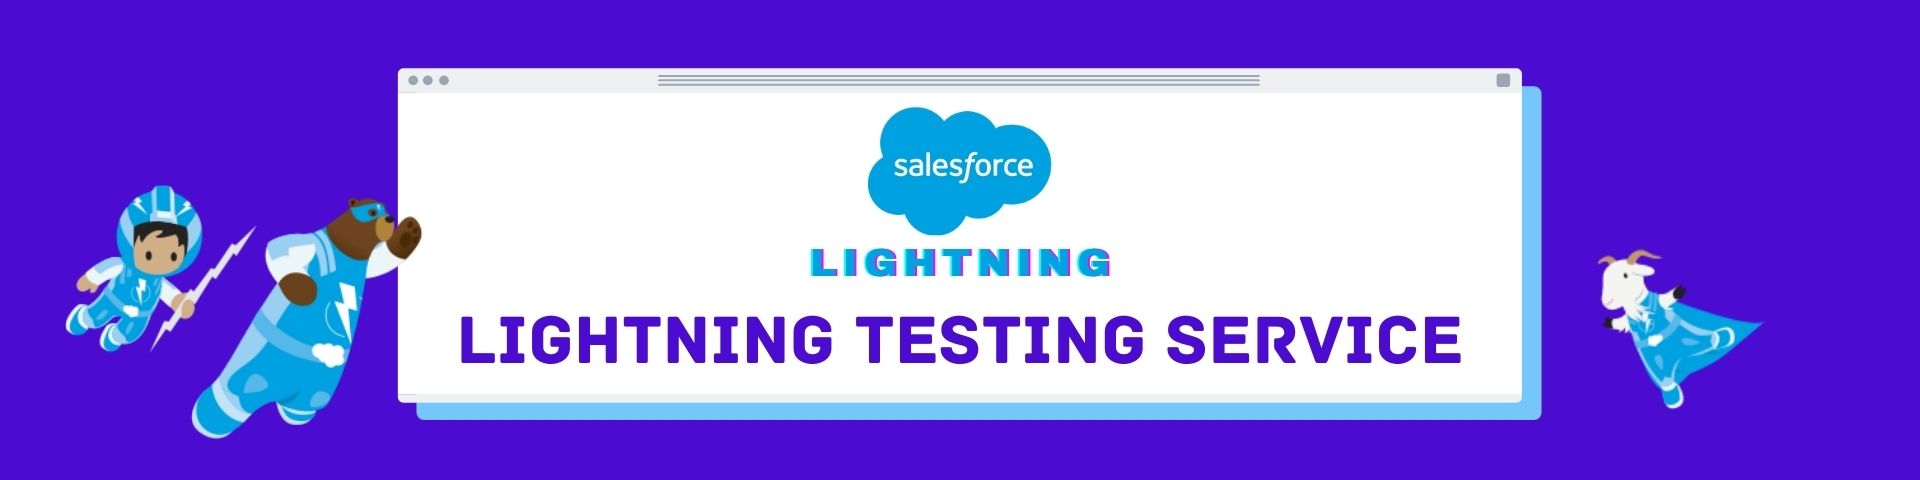 Salesforce Lightning Testing Service